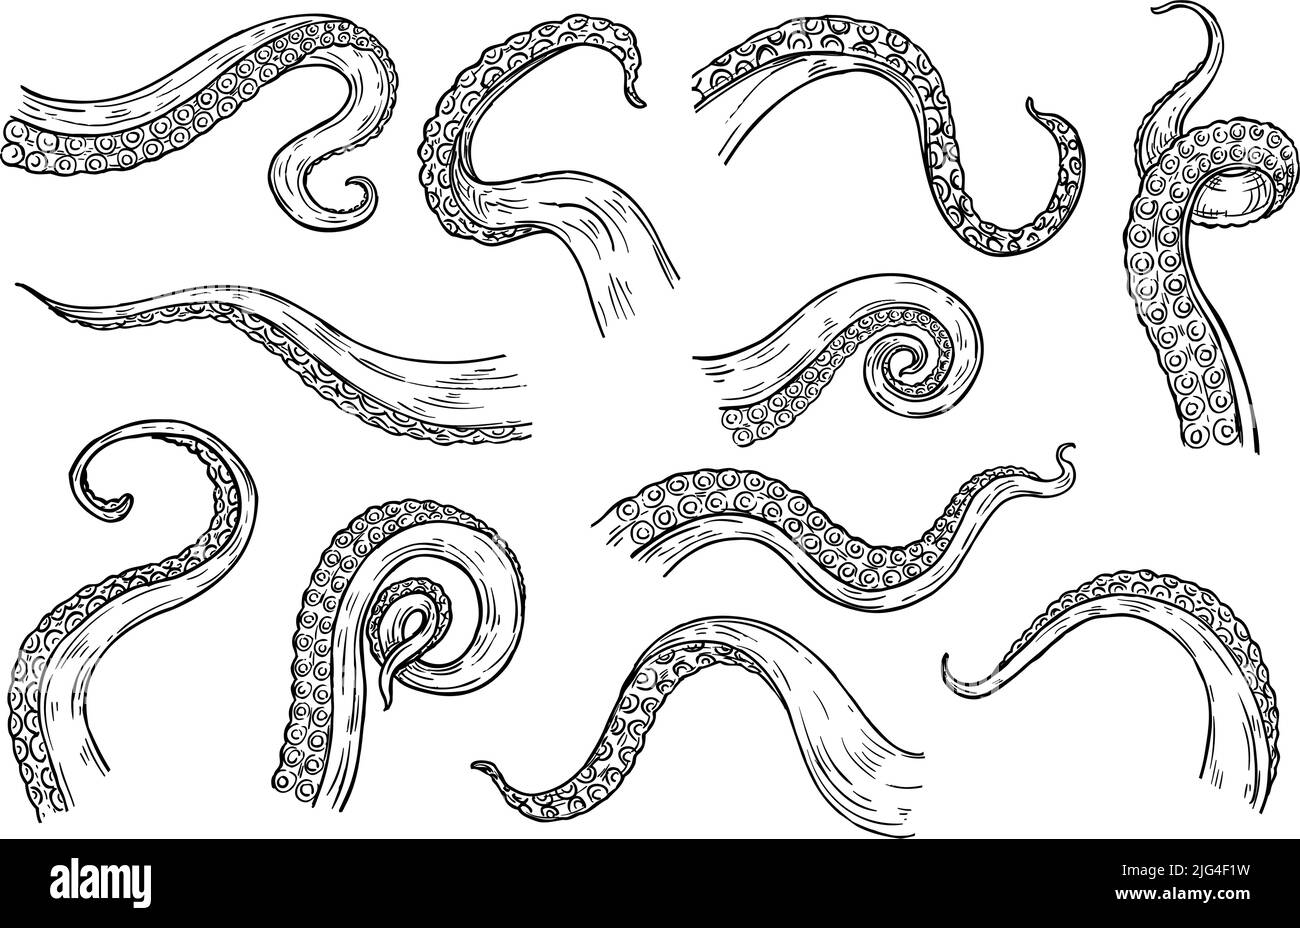 Octopus tentacles engraving. Hand drawn tentacle of underwater squid animal, sketch kraken or Cthulhu arms with sucker rings Stock Vector